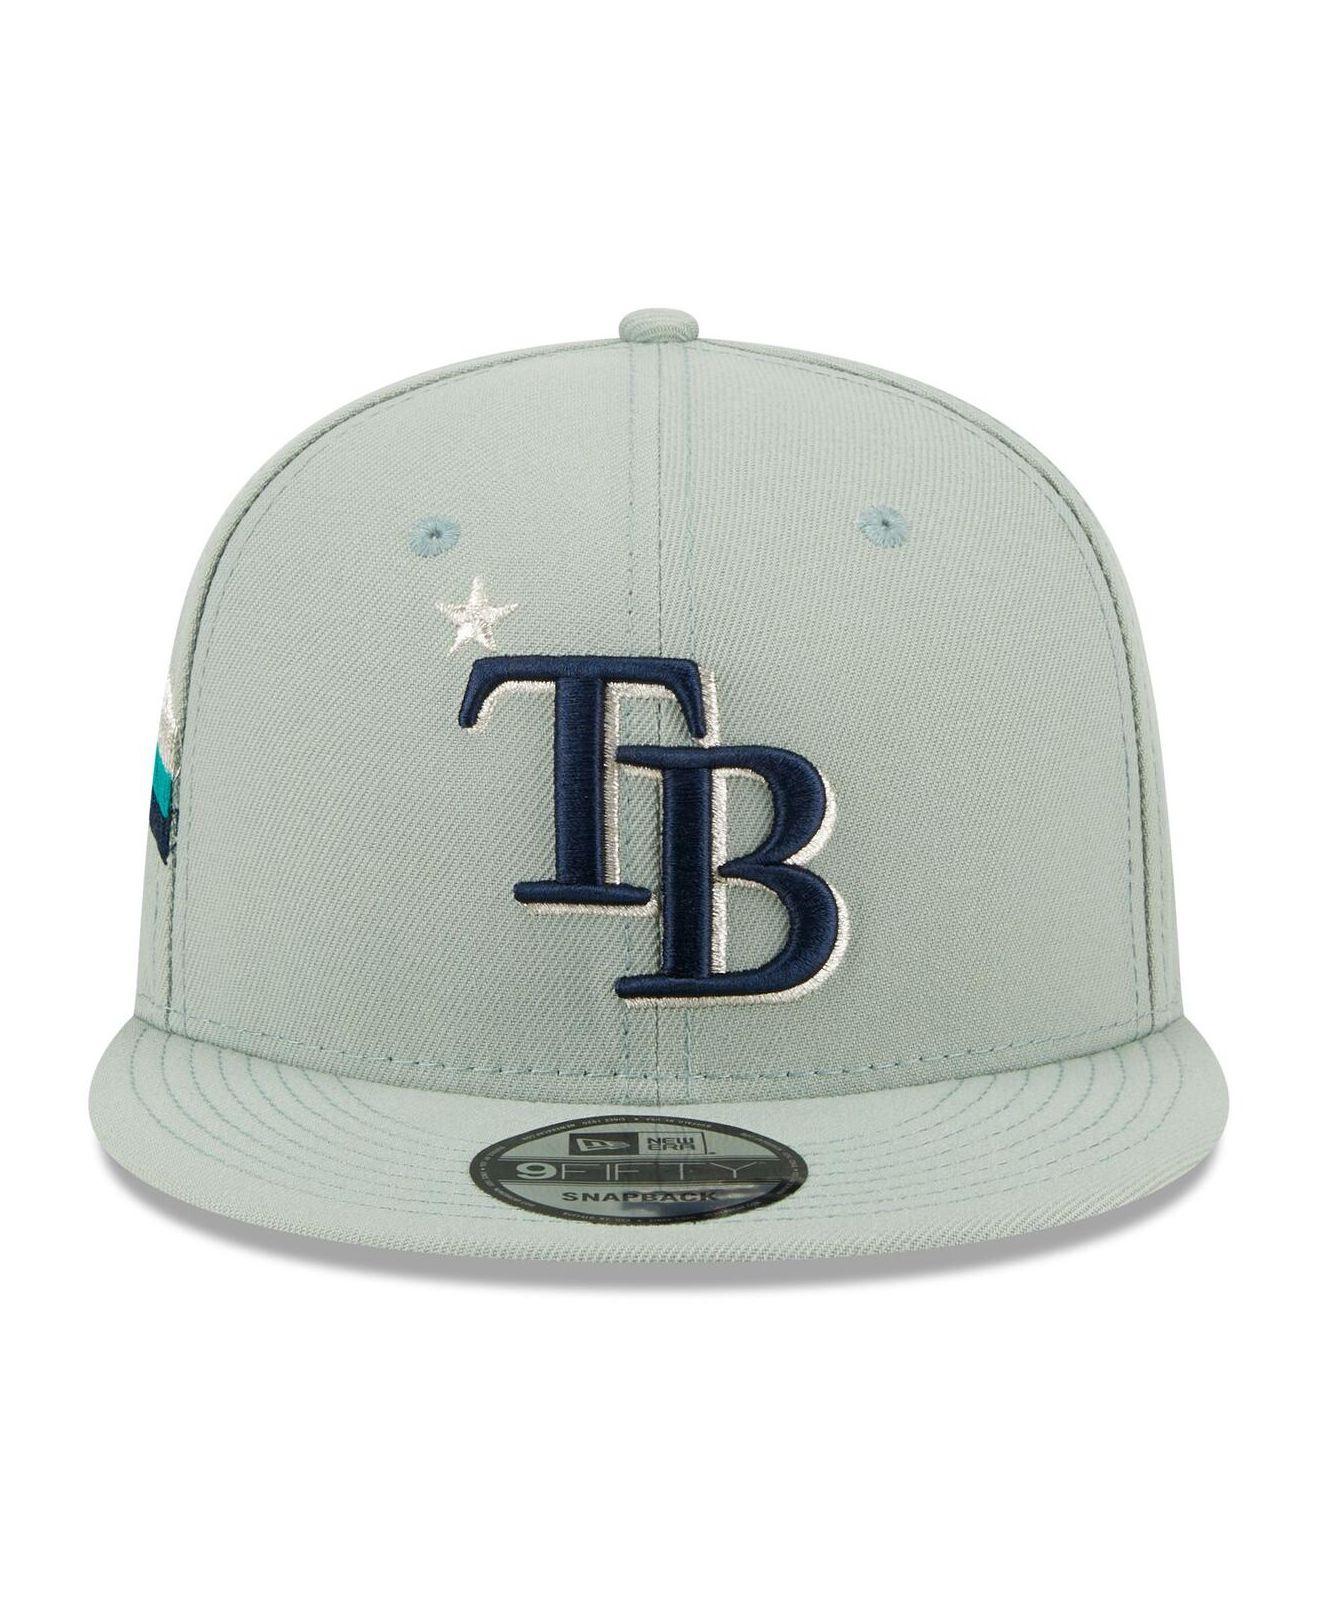 KTZ Mint Tampa Bay Rays 2023 Mlb All-star Game 9fifty Snapback Hat